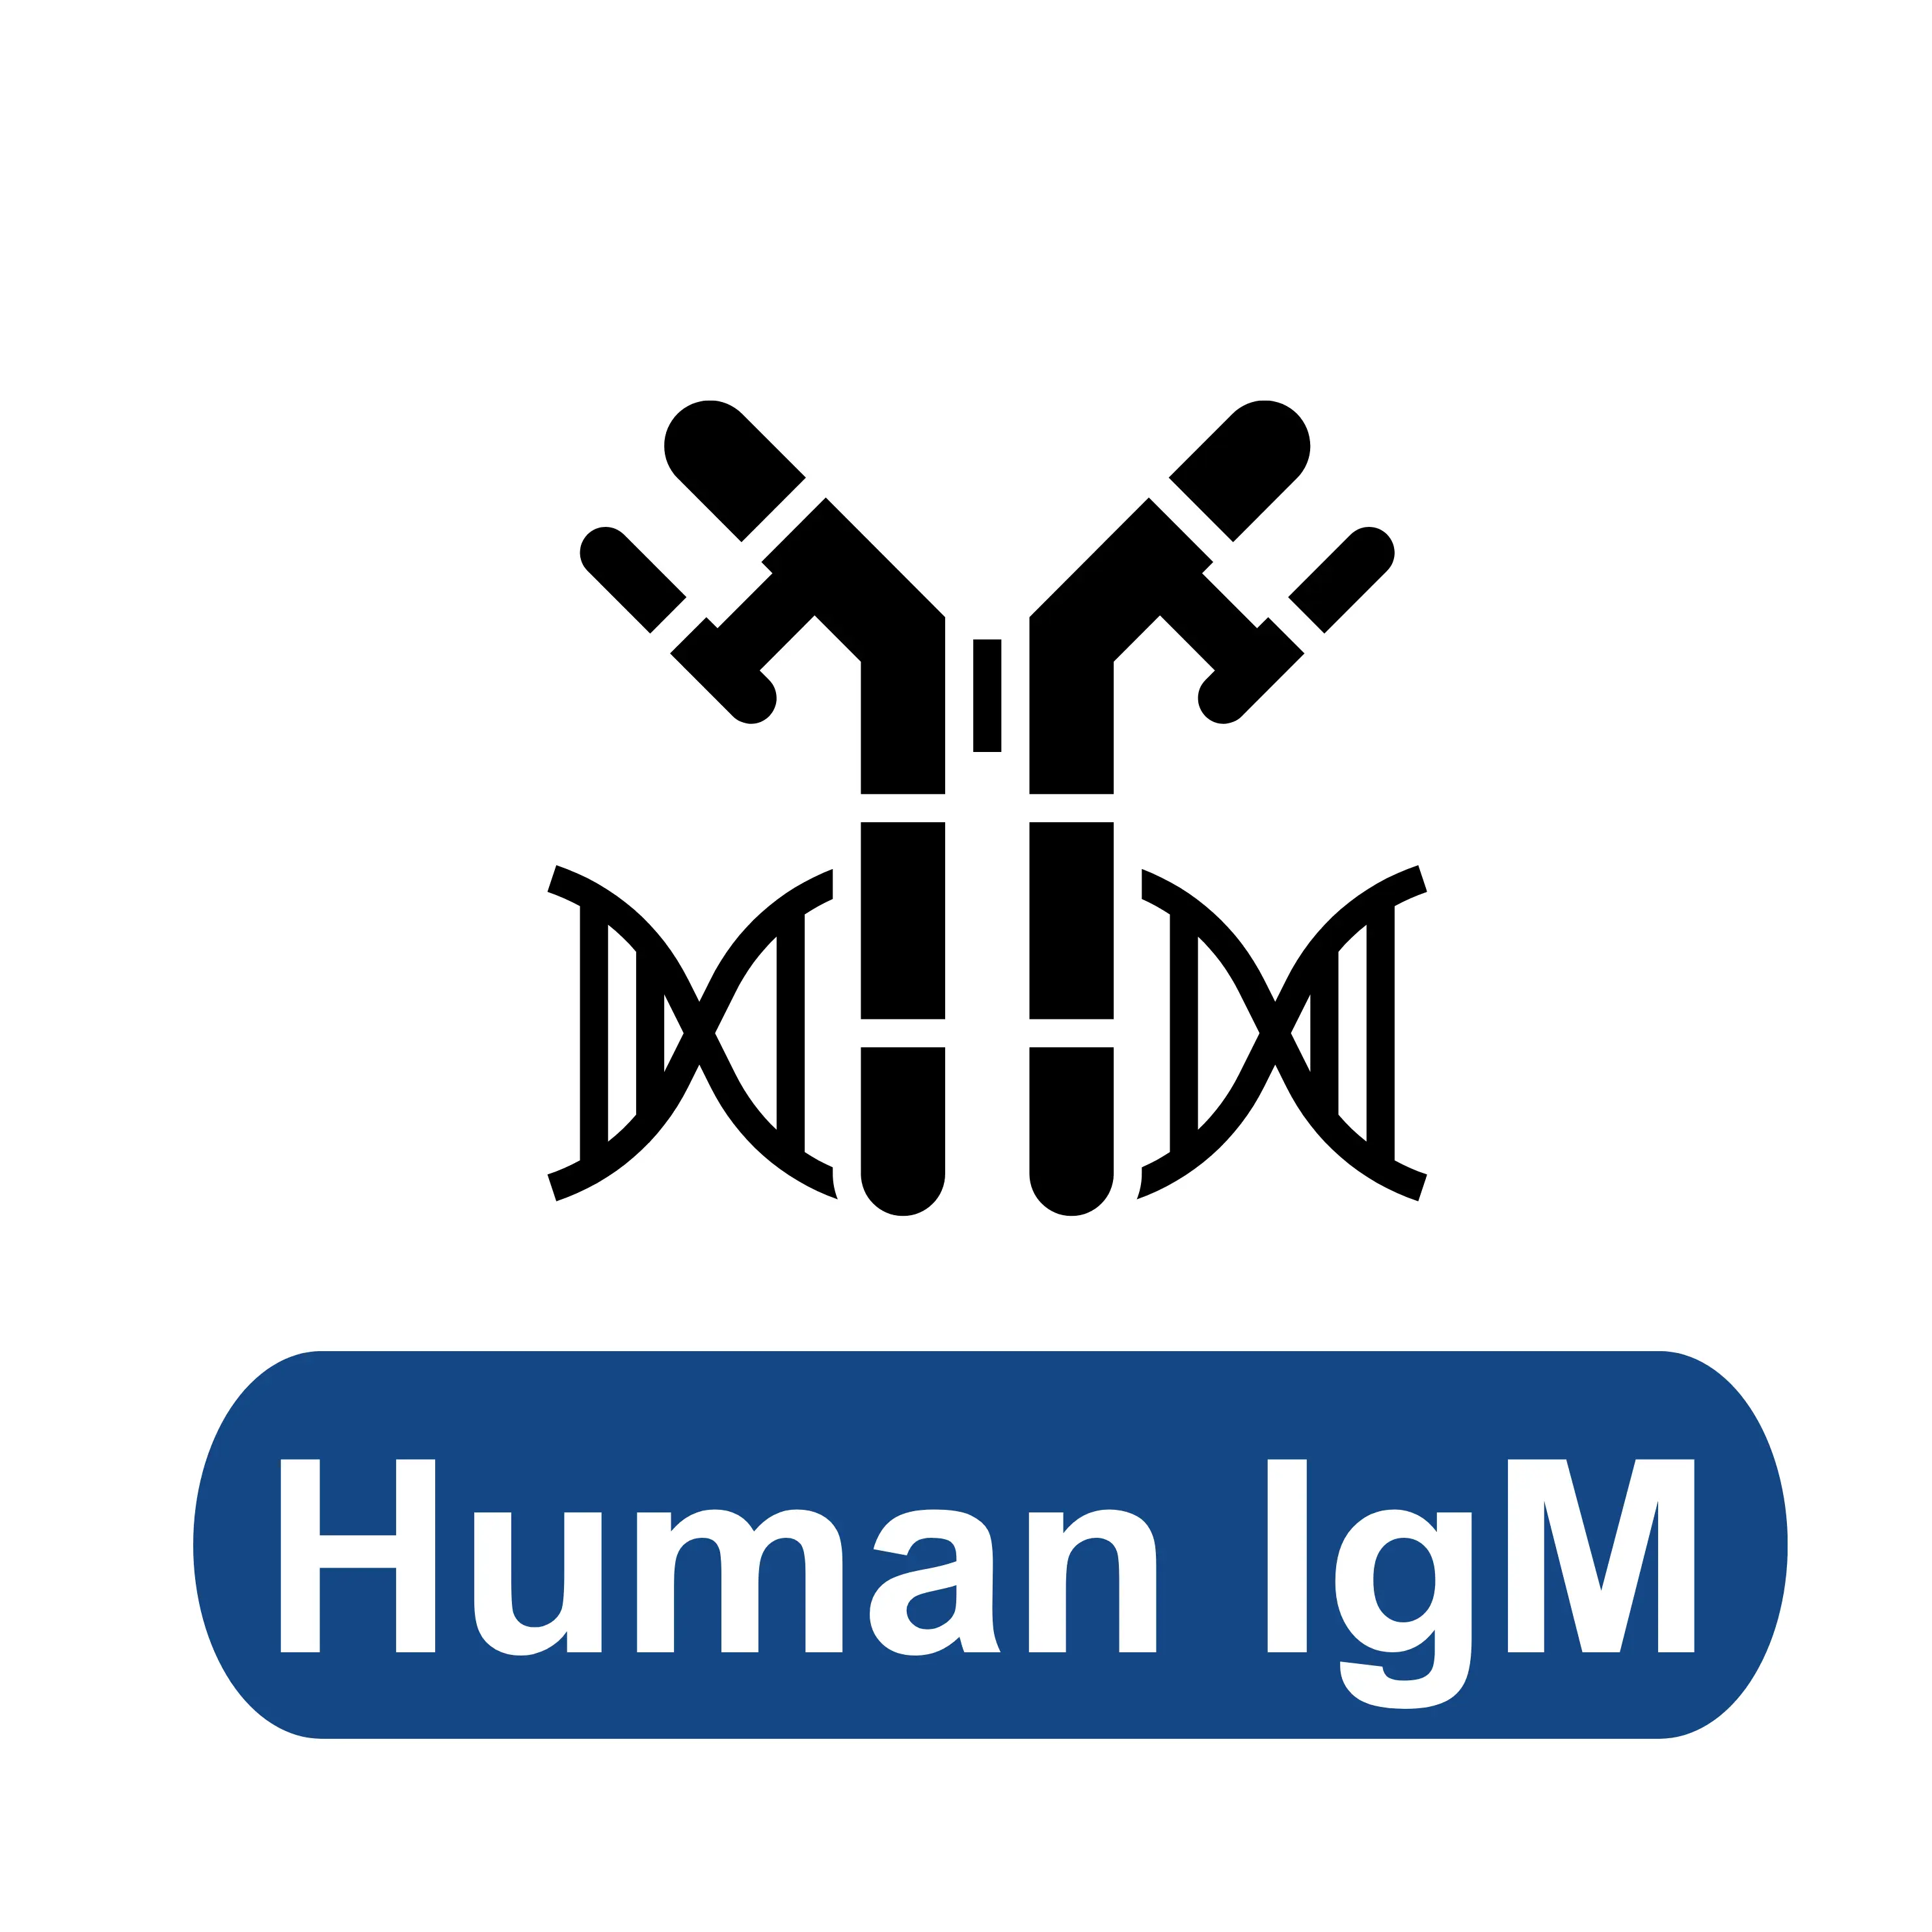 Human IgM